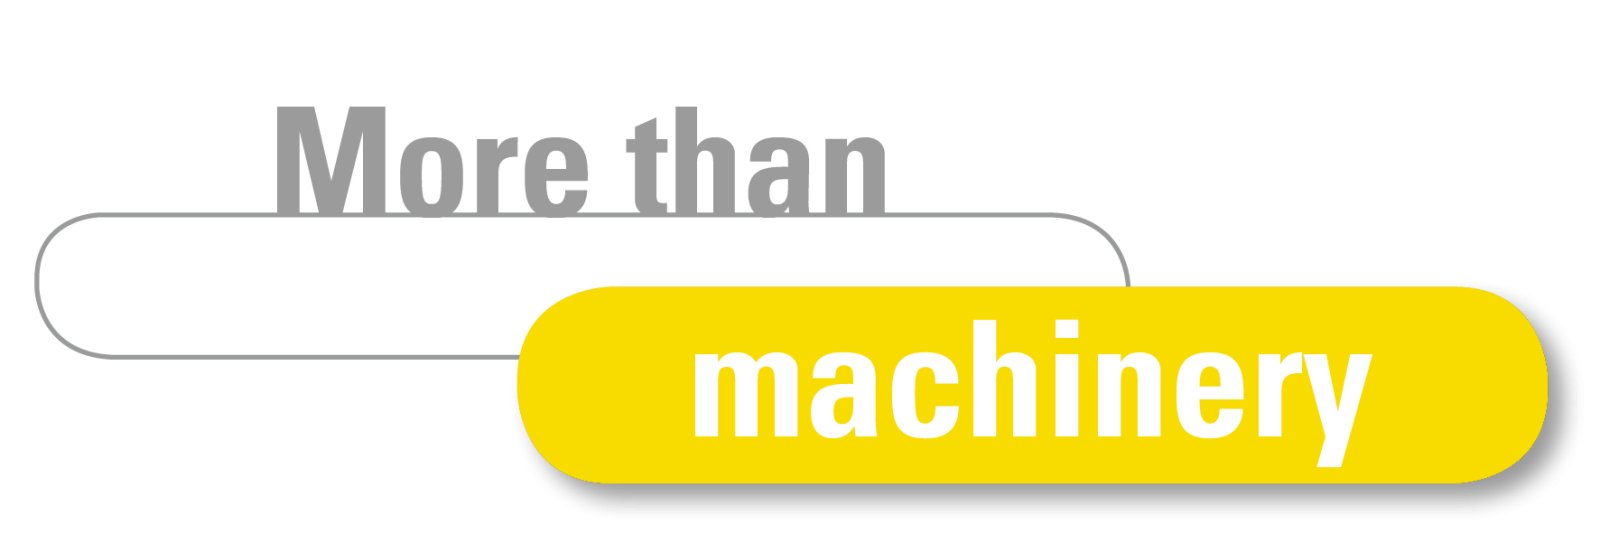 More than machinery